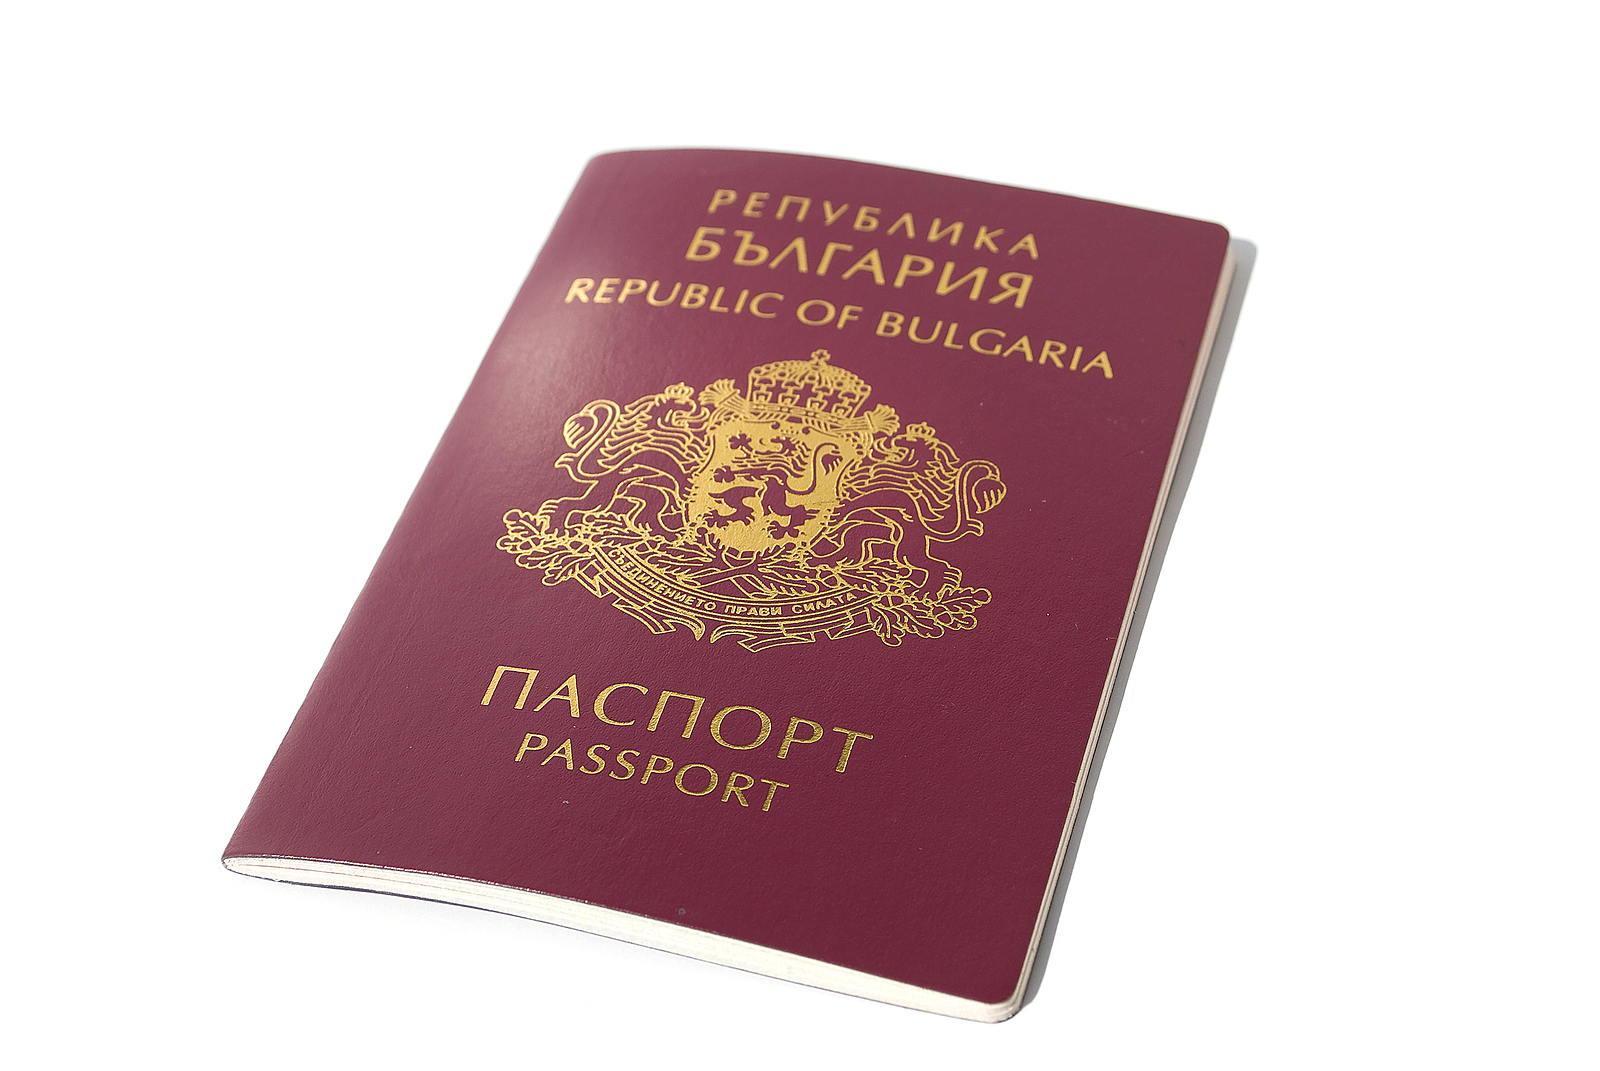 Vietnam Visa Extension And Visa Renewal For Bulgaria Passport Holders 2022 – Procedures, Fees And Documents To Extend Business Visa & Tourist Visa